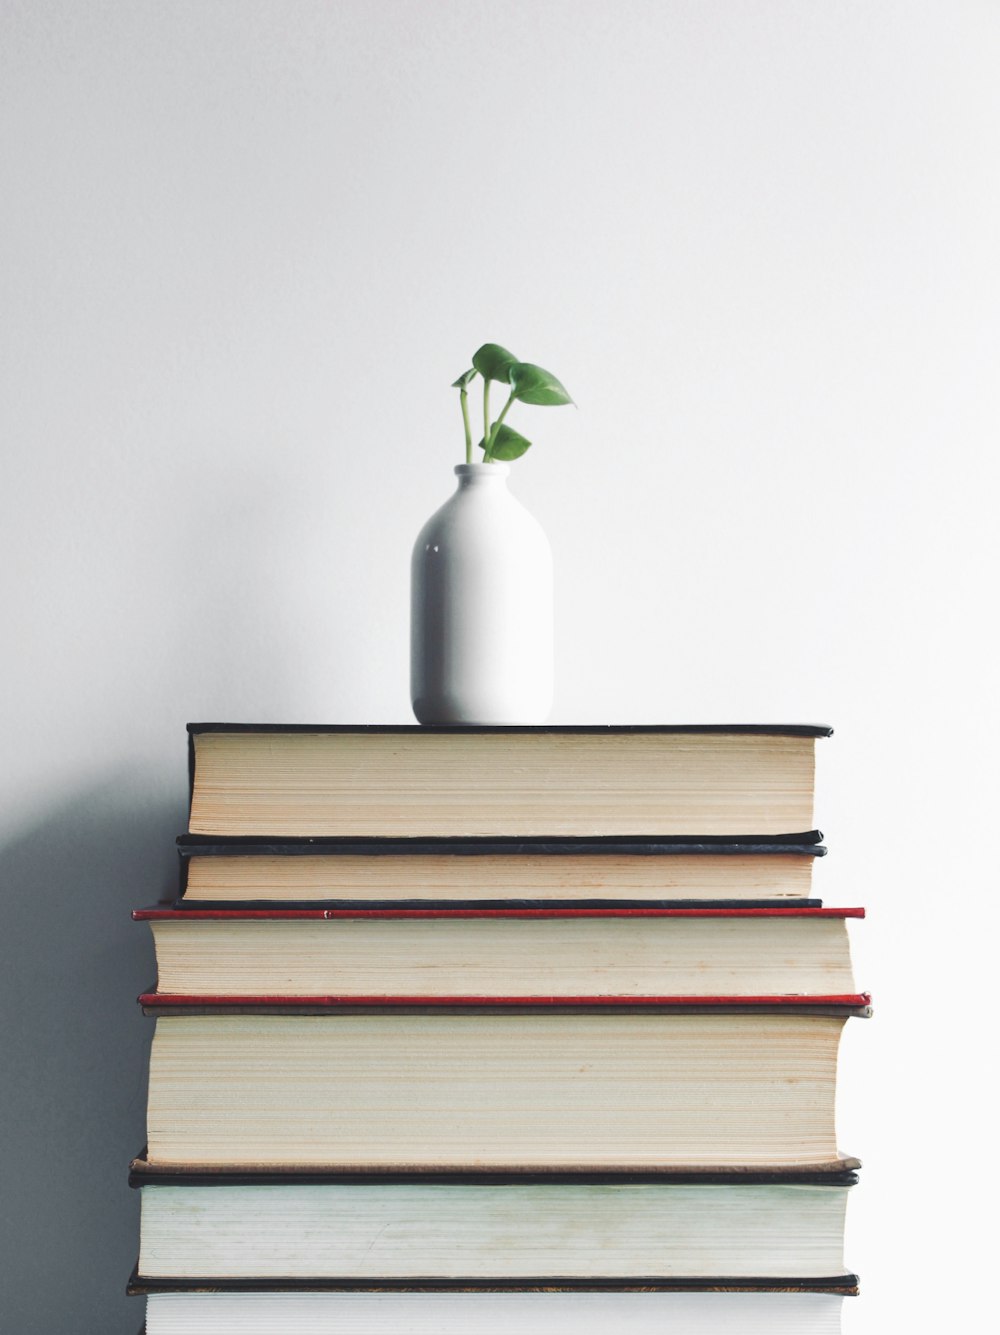 vaso in ceramica bianca con pianta verde sopra i libri